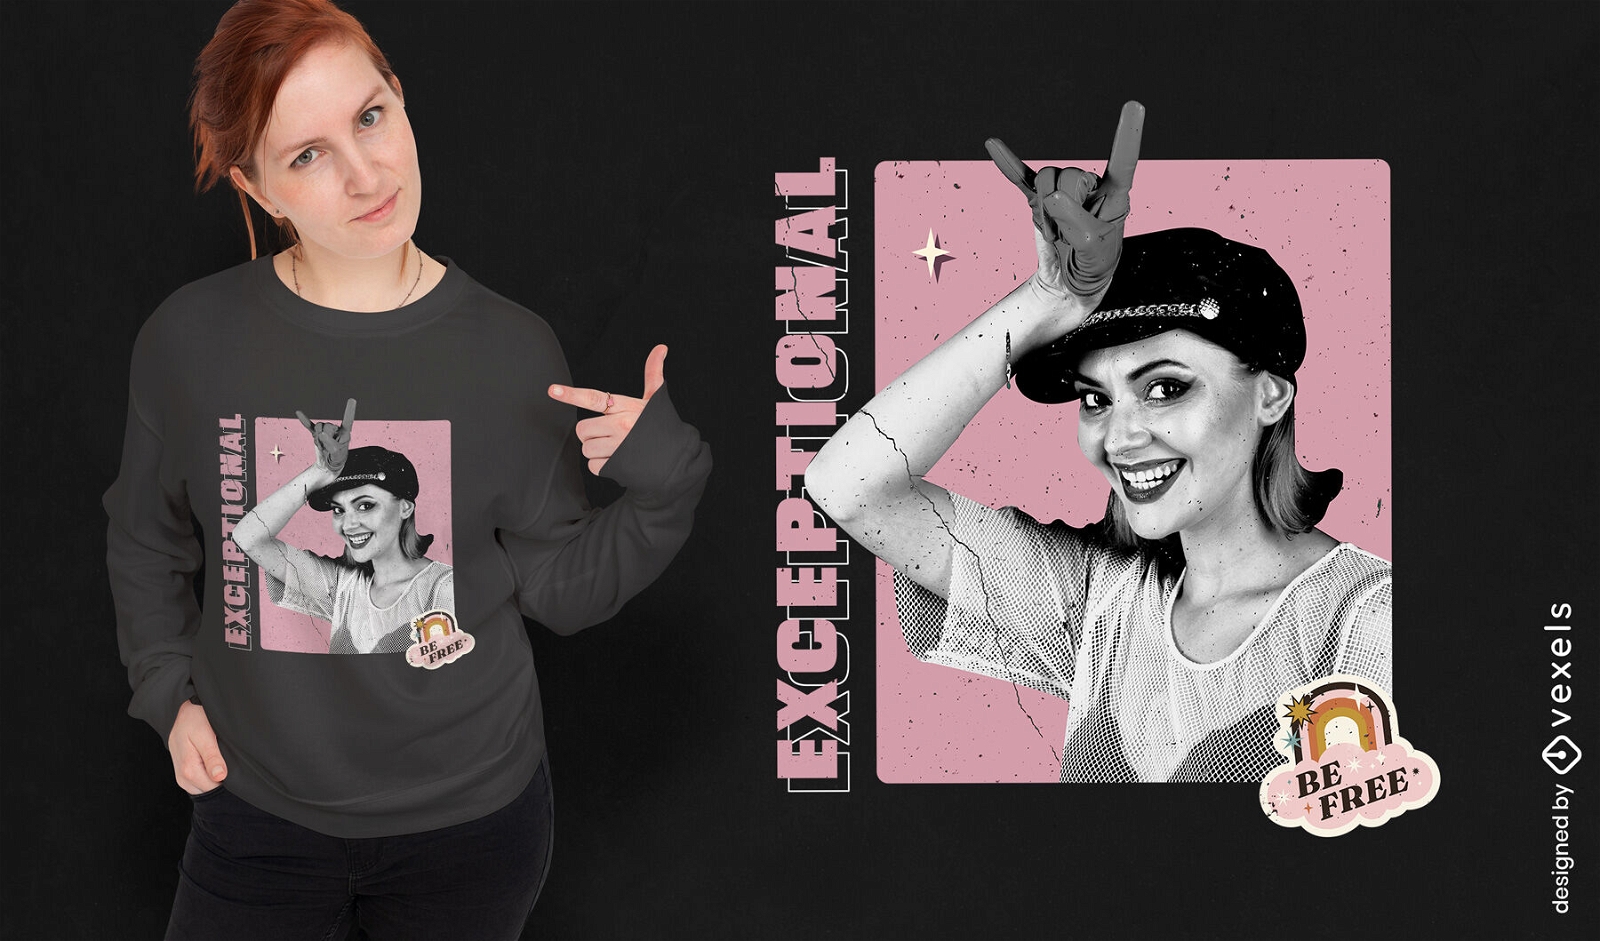 Be free woman t-shirt design